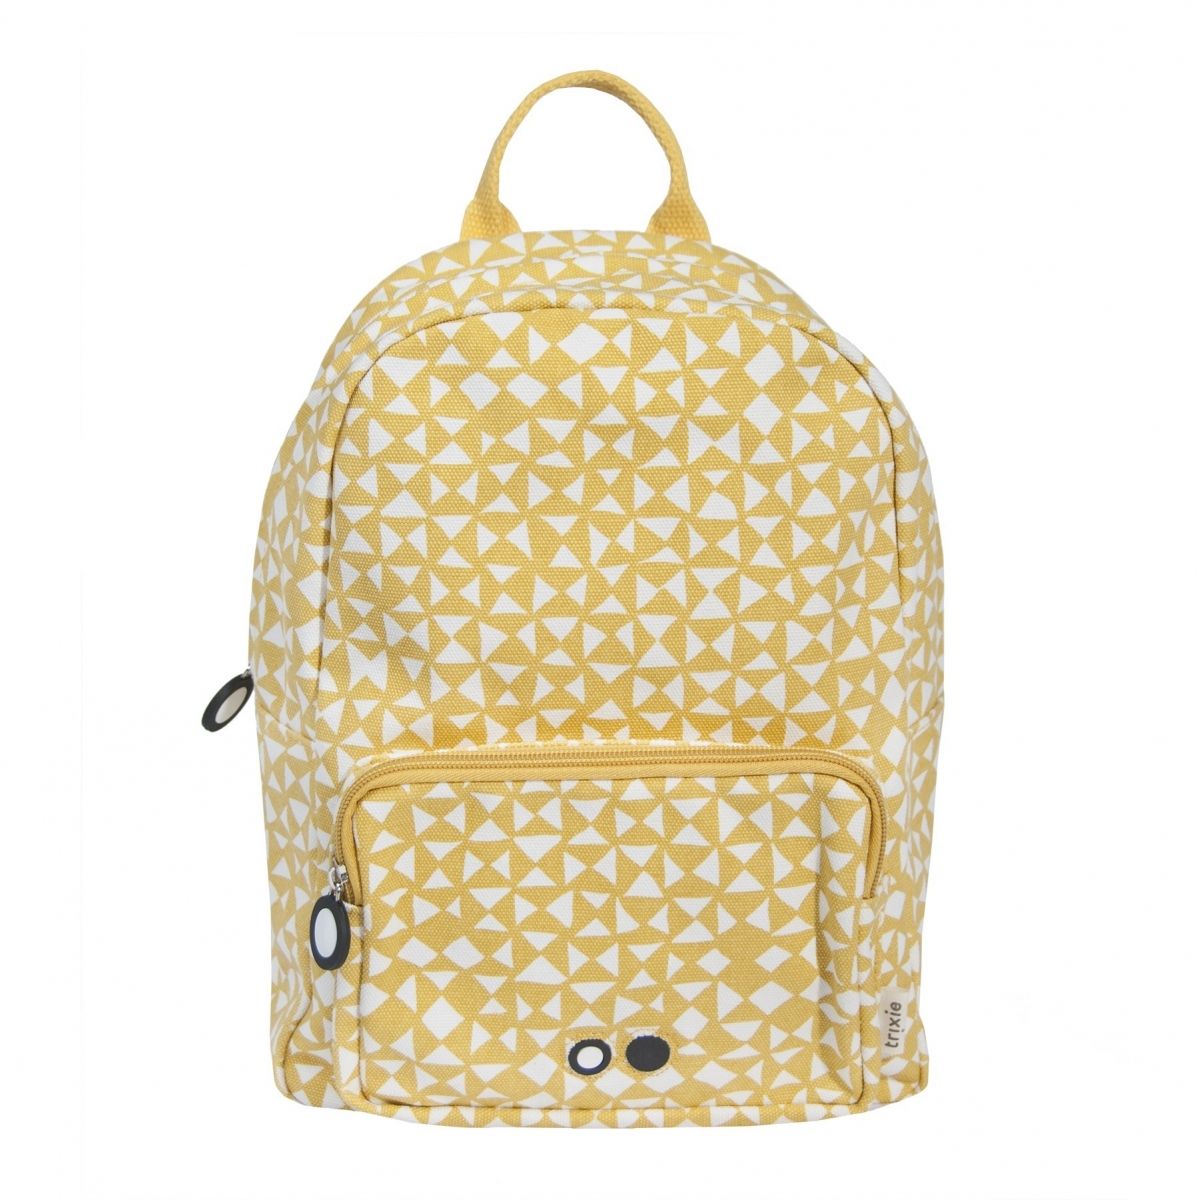 Trixie Backpack Diabolo mustard 90-018 